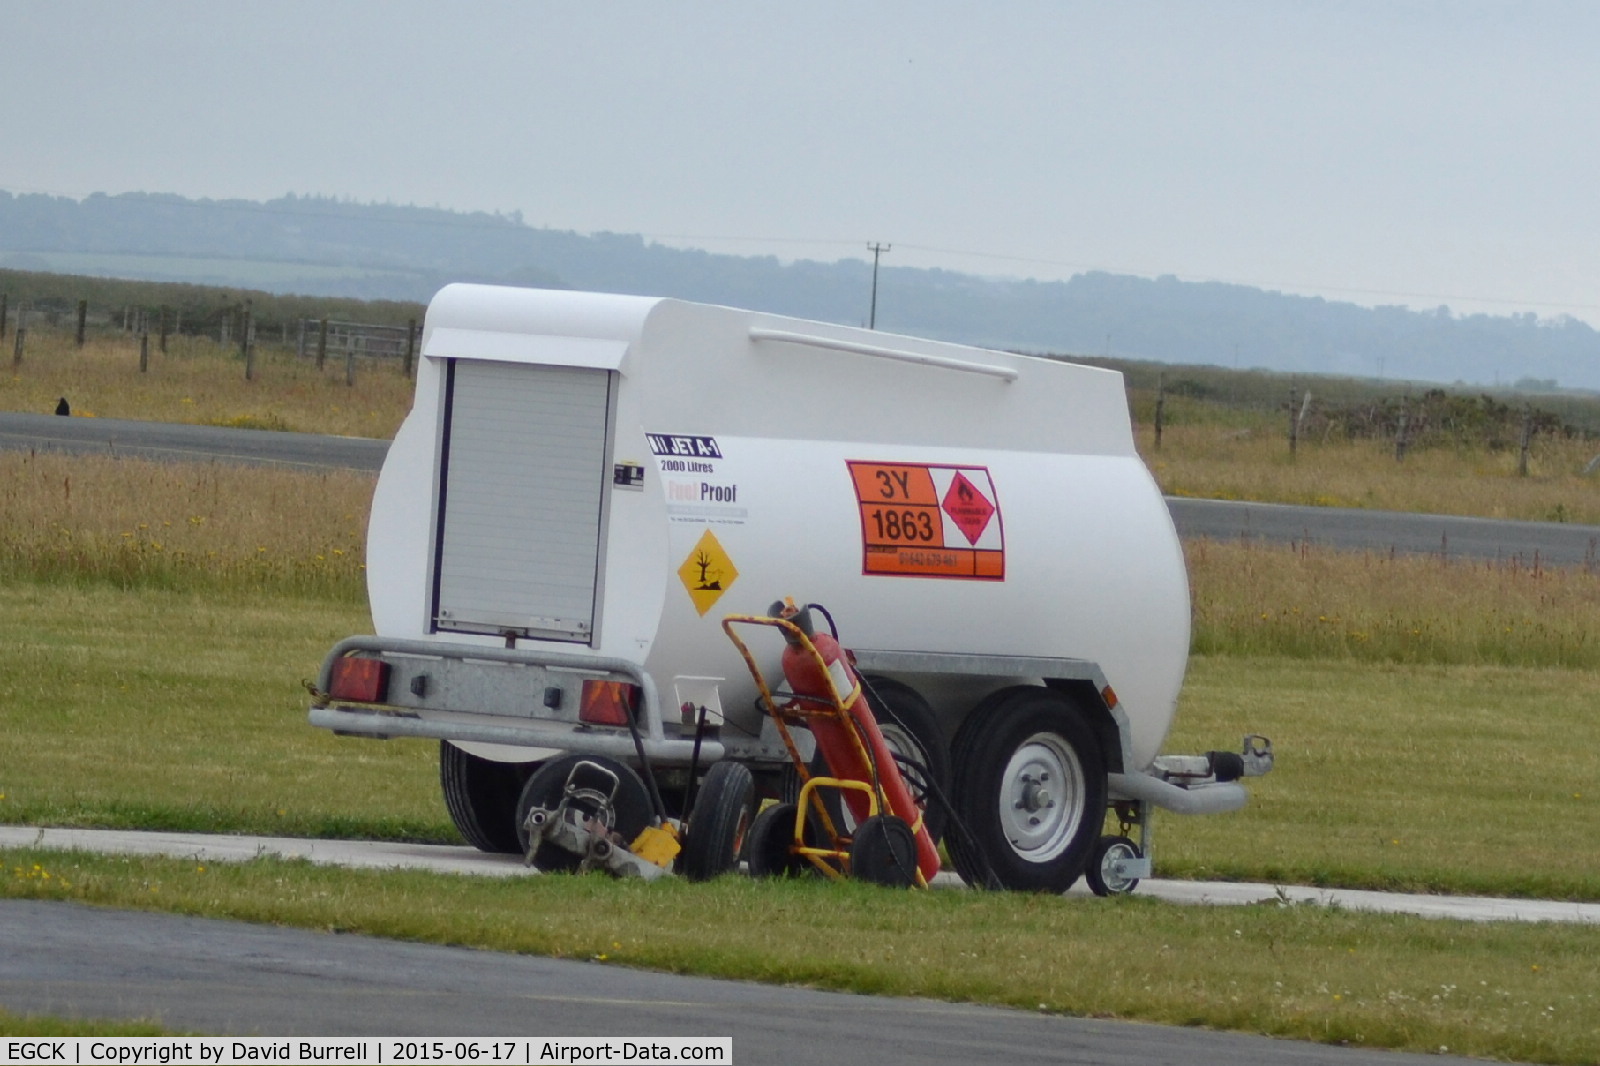 Caernarfon Airport, Caernarfon, Wales United Kingdom (EGCK) - JET A-1 2000 Litres Fuel Tank/Trailer